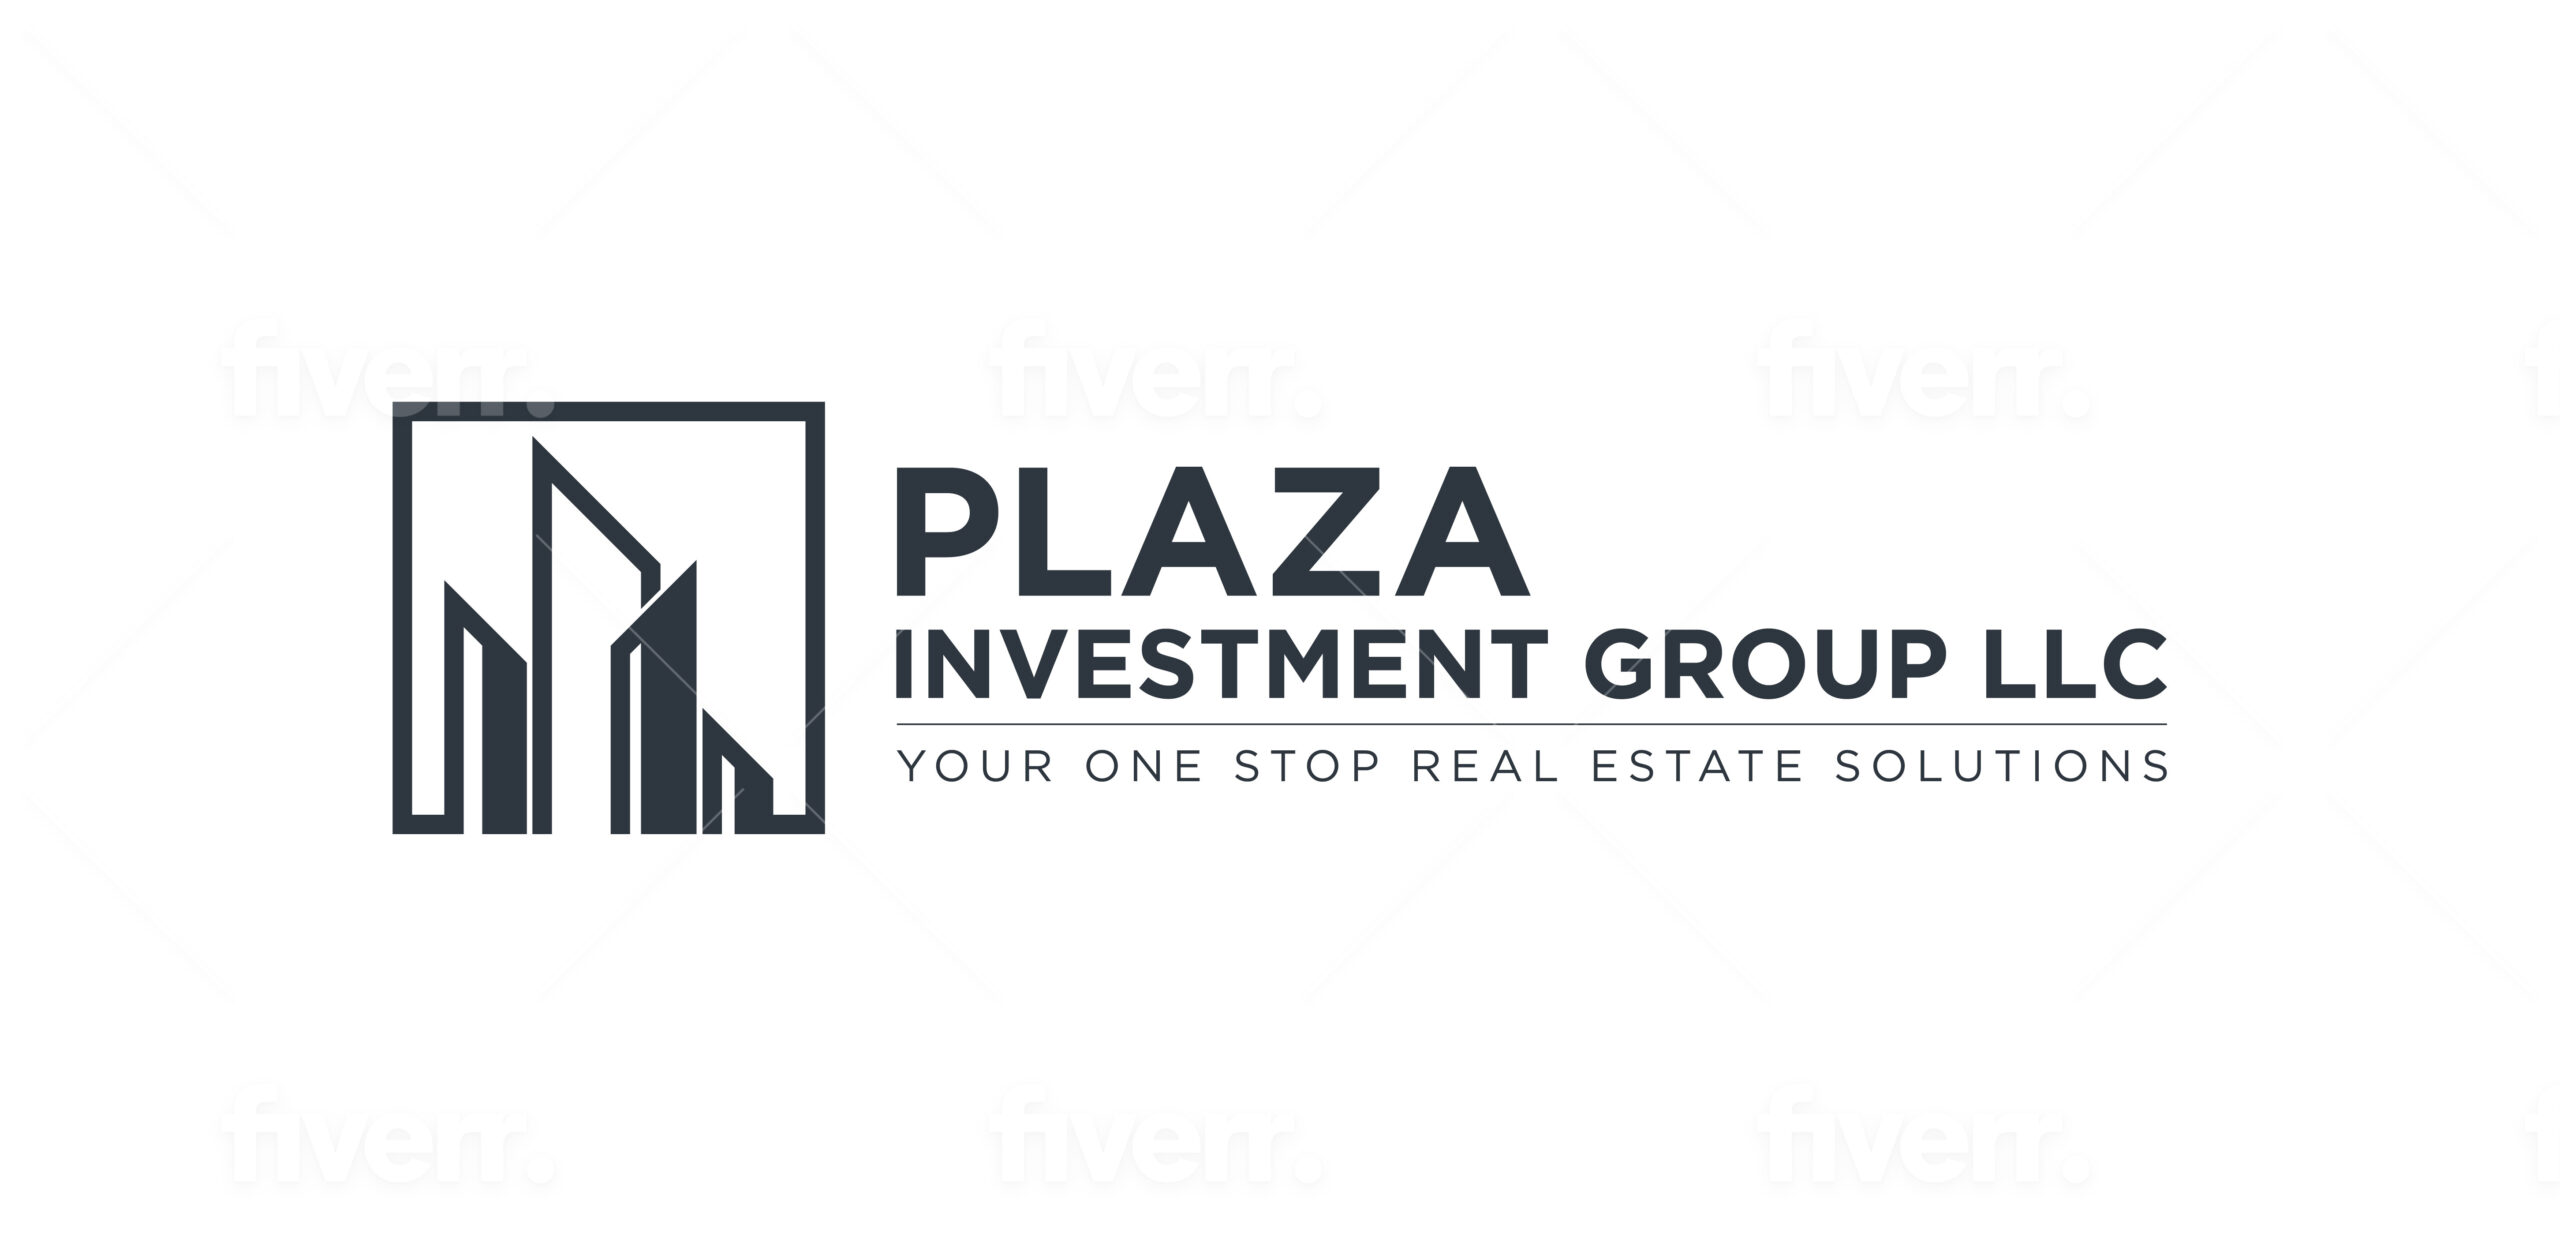 Plaza Investment Group LLC